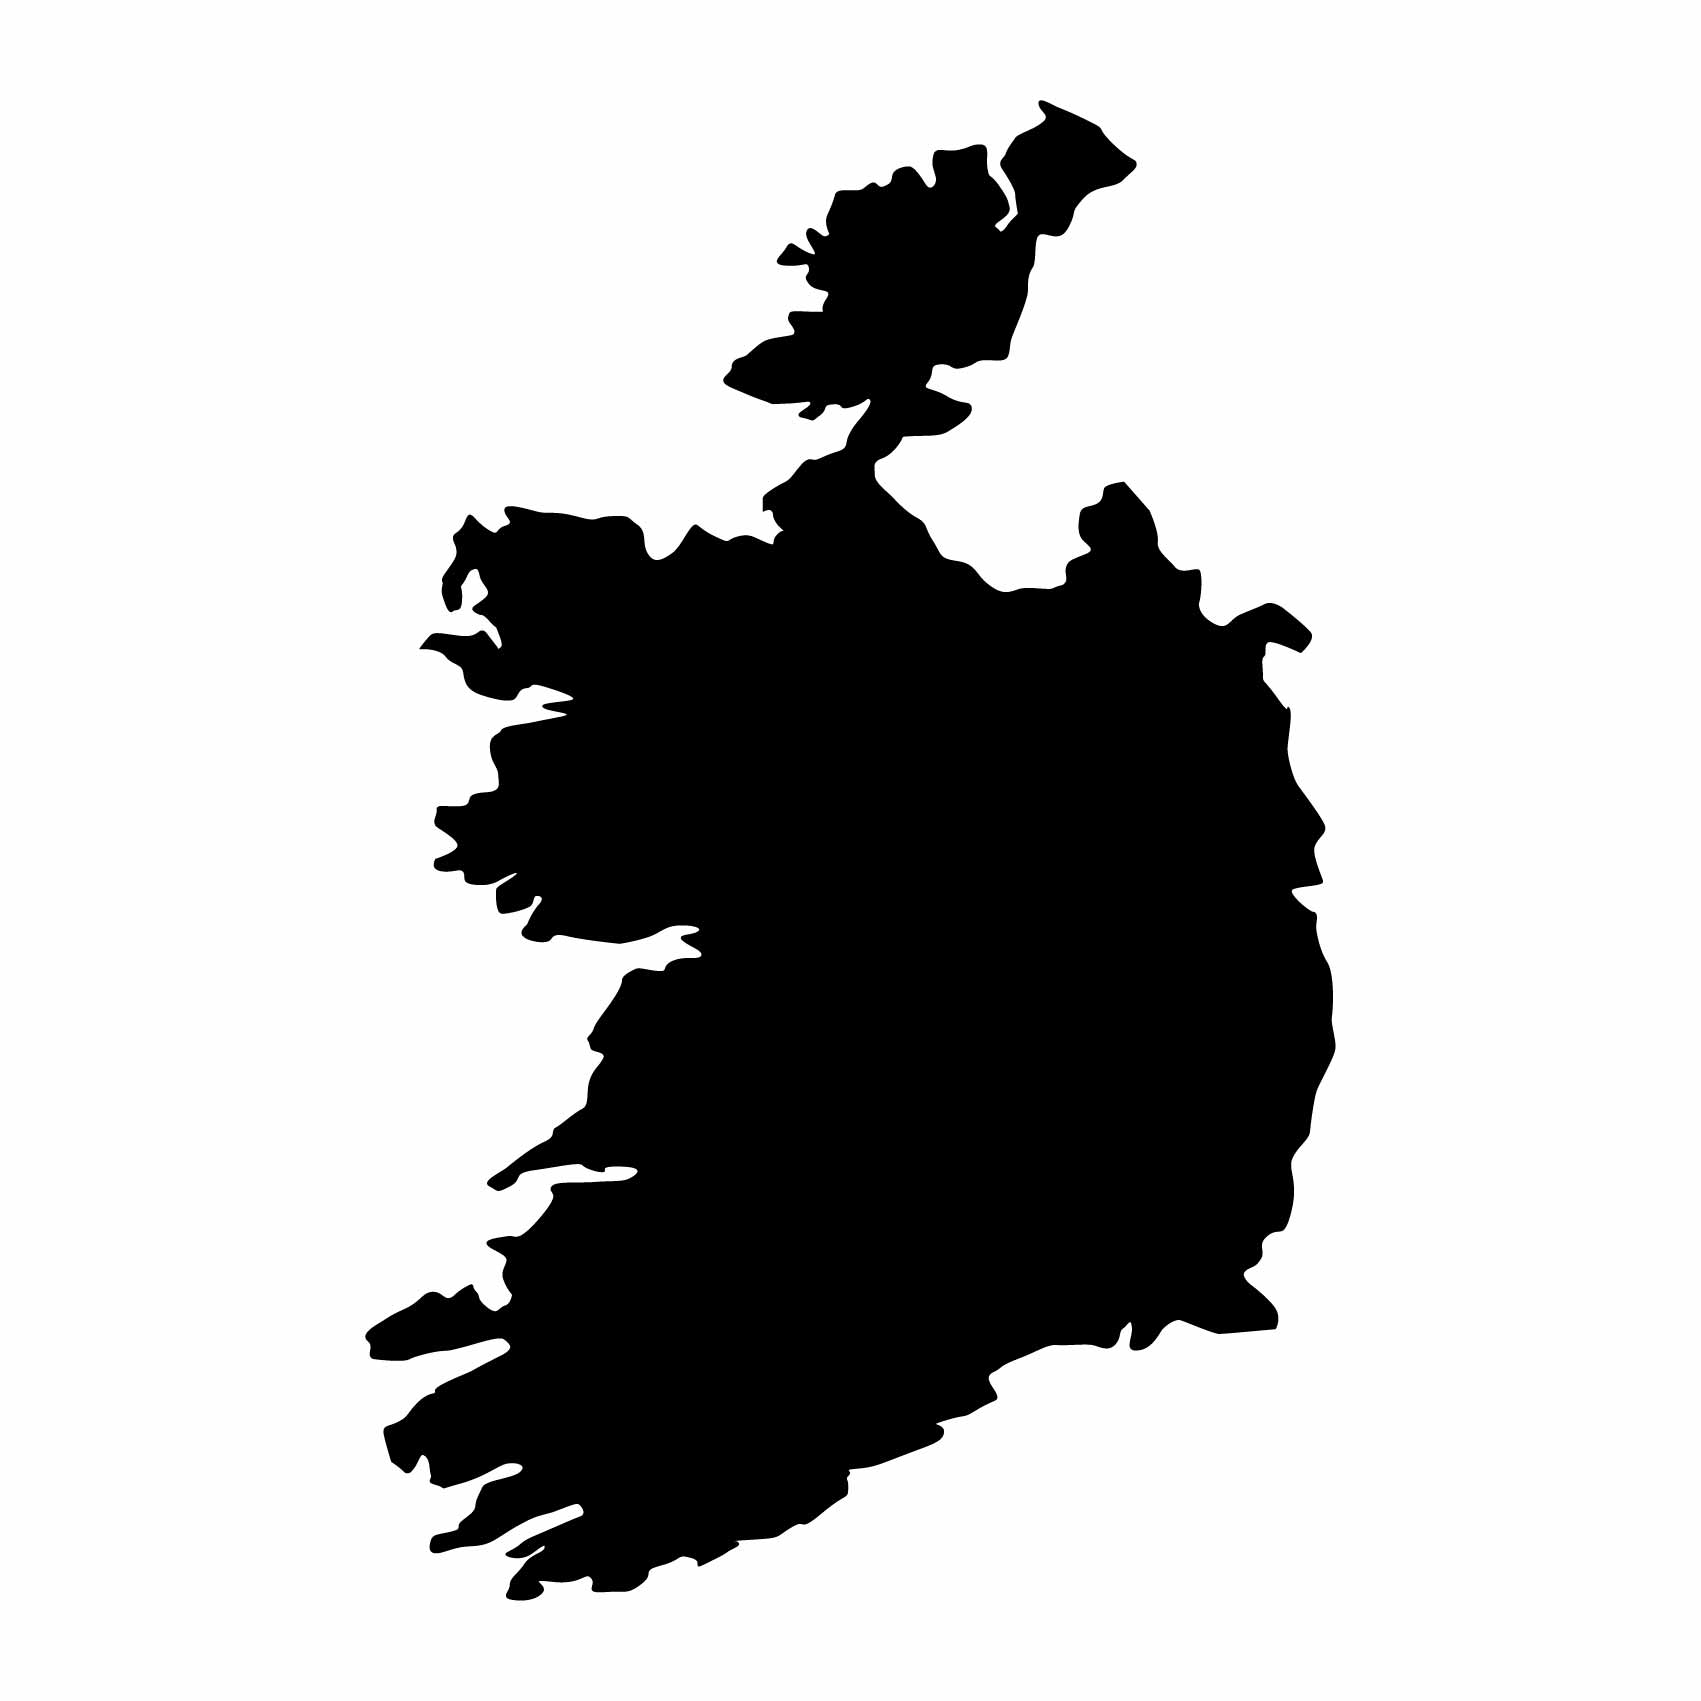 stickers-irlande-ref6pays-stickers-muraux-carte-irlande-autocollant-deco-chambre-salon-sticker-mural-irlande-irland-(2)